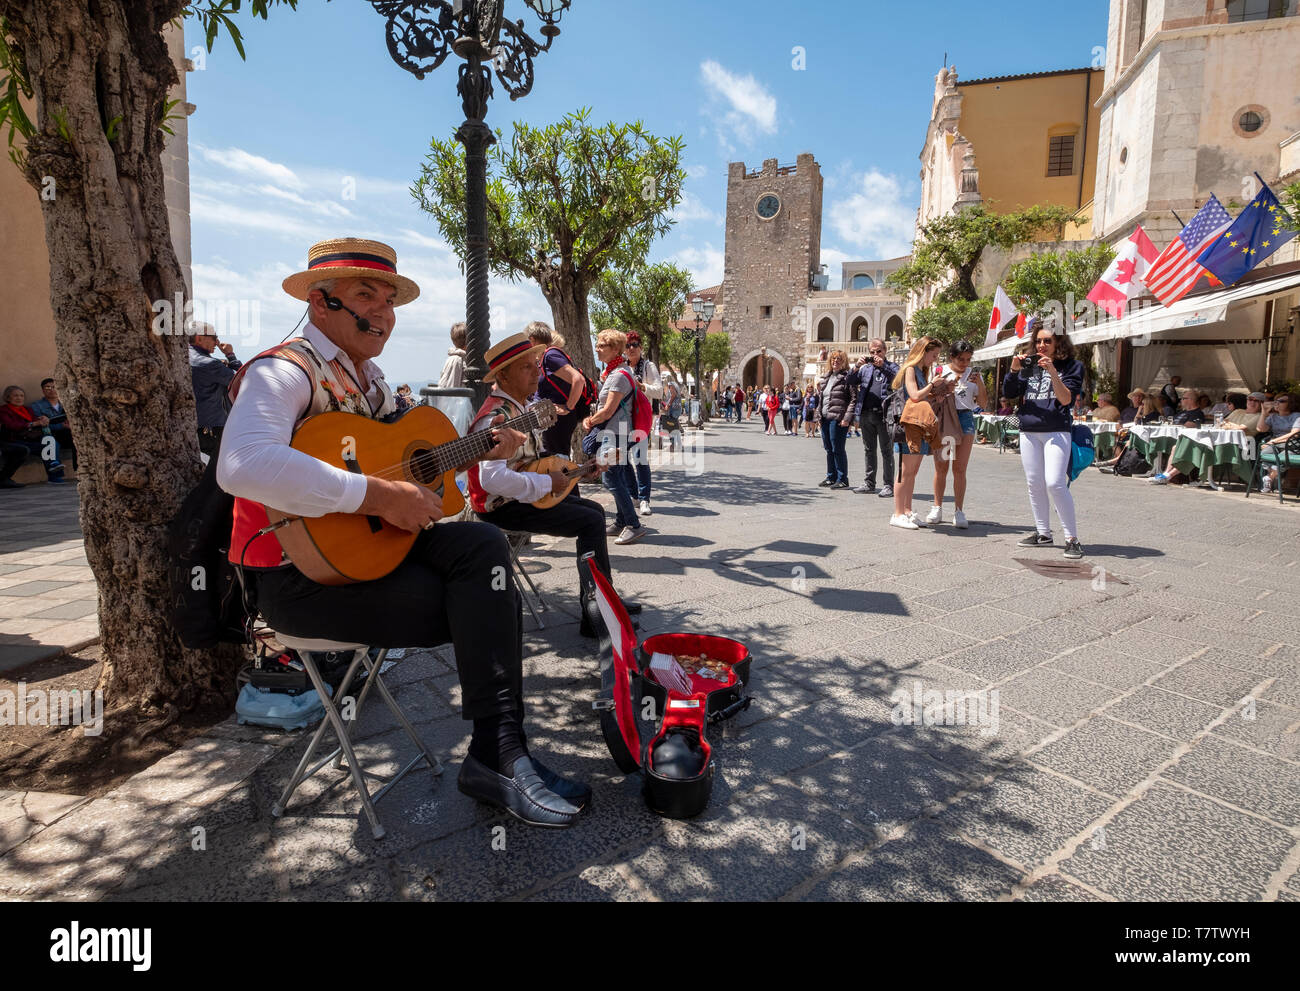 Street musicians performing on the Corsa Umberto, Taormina, Sicily. Stock Photo